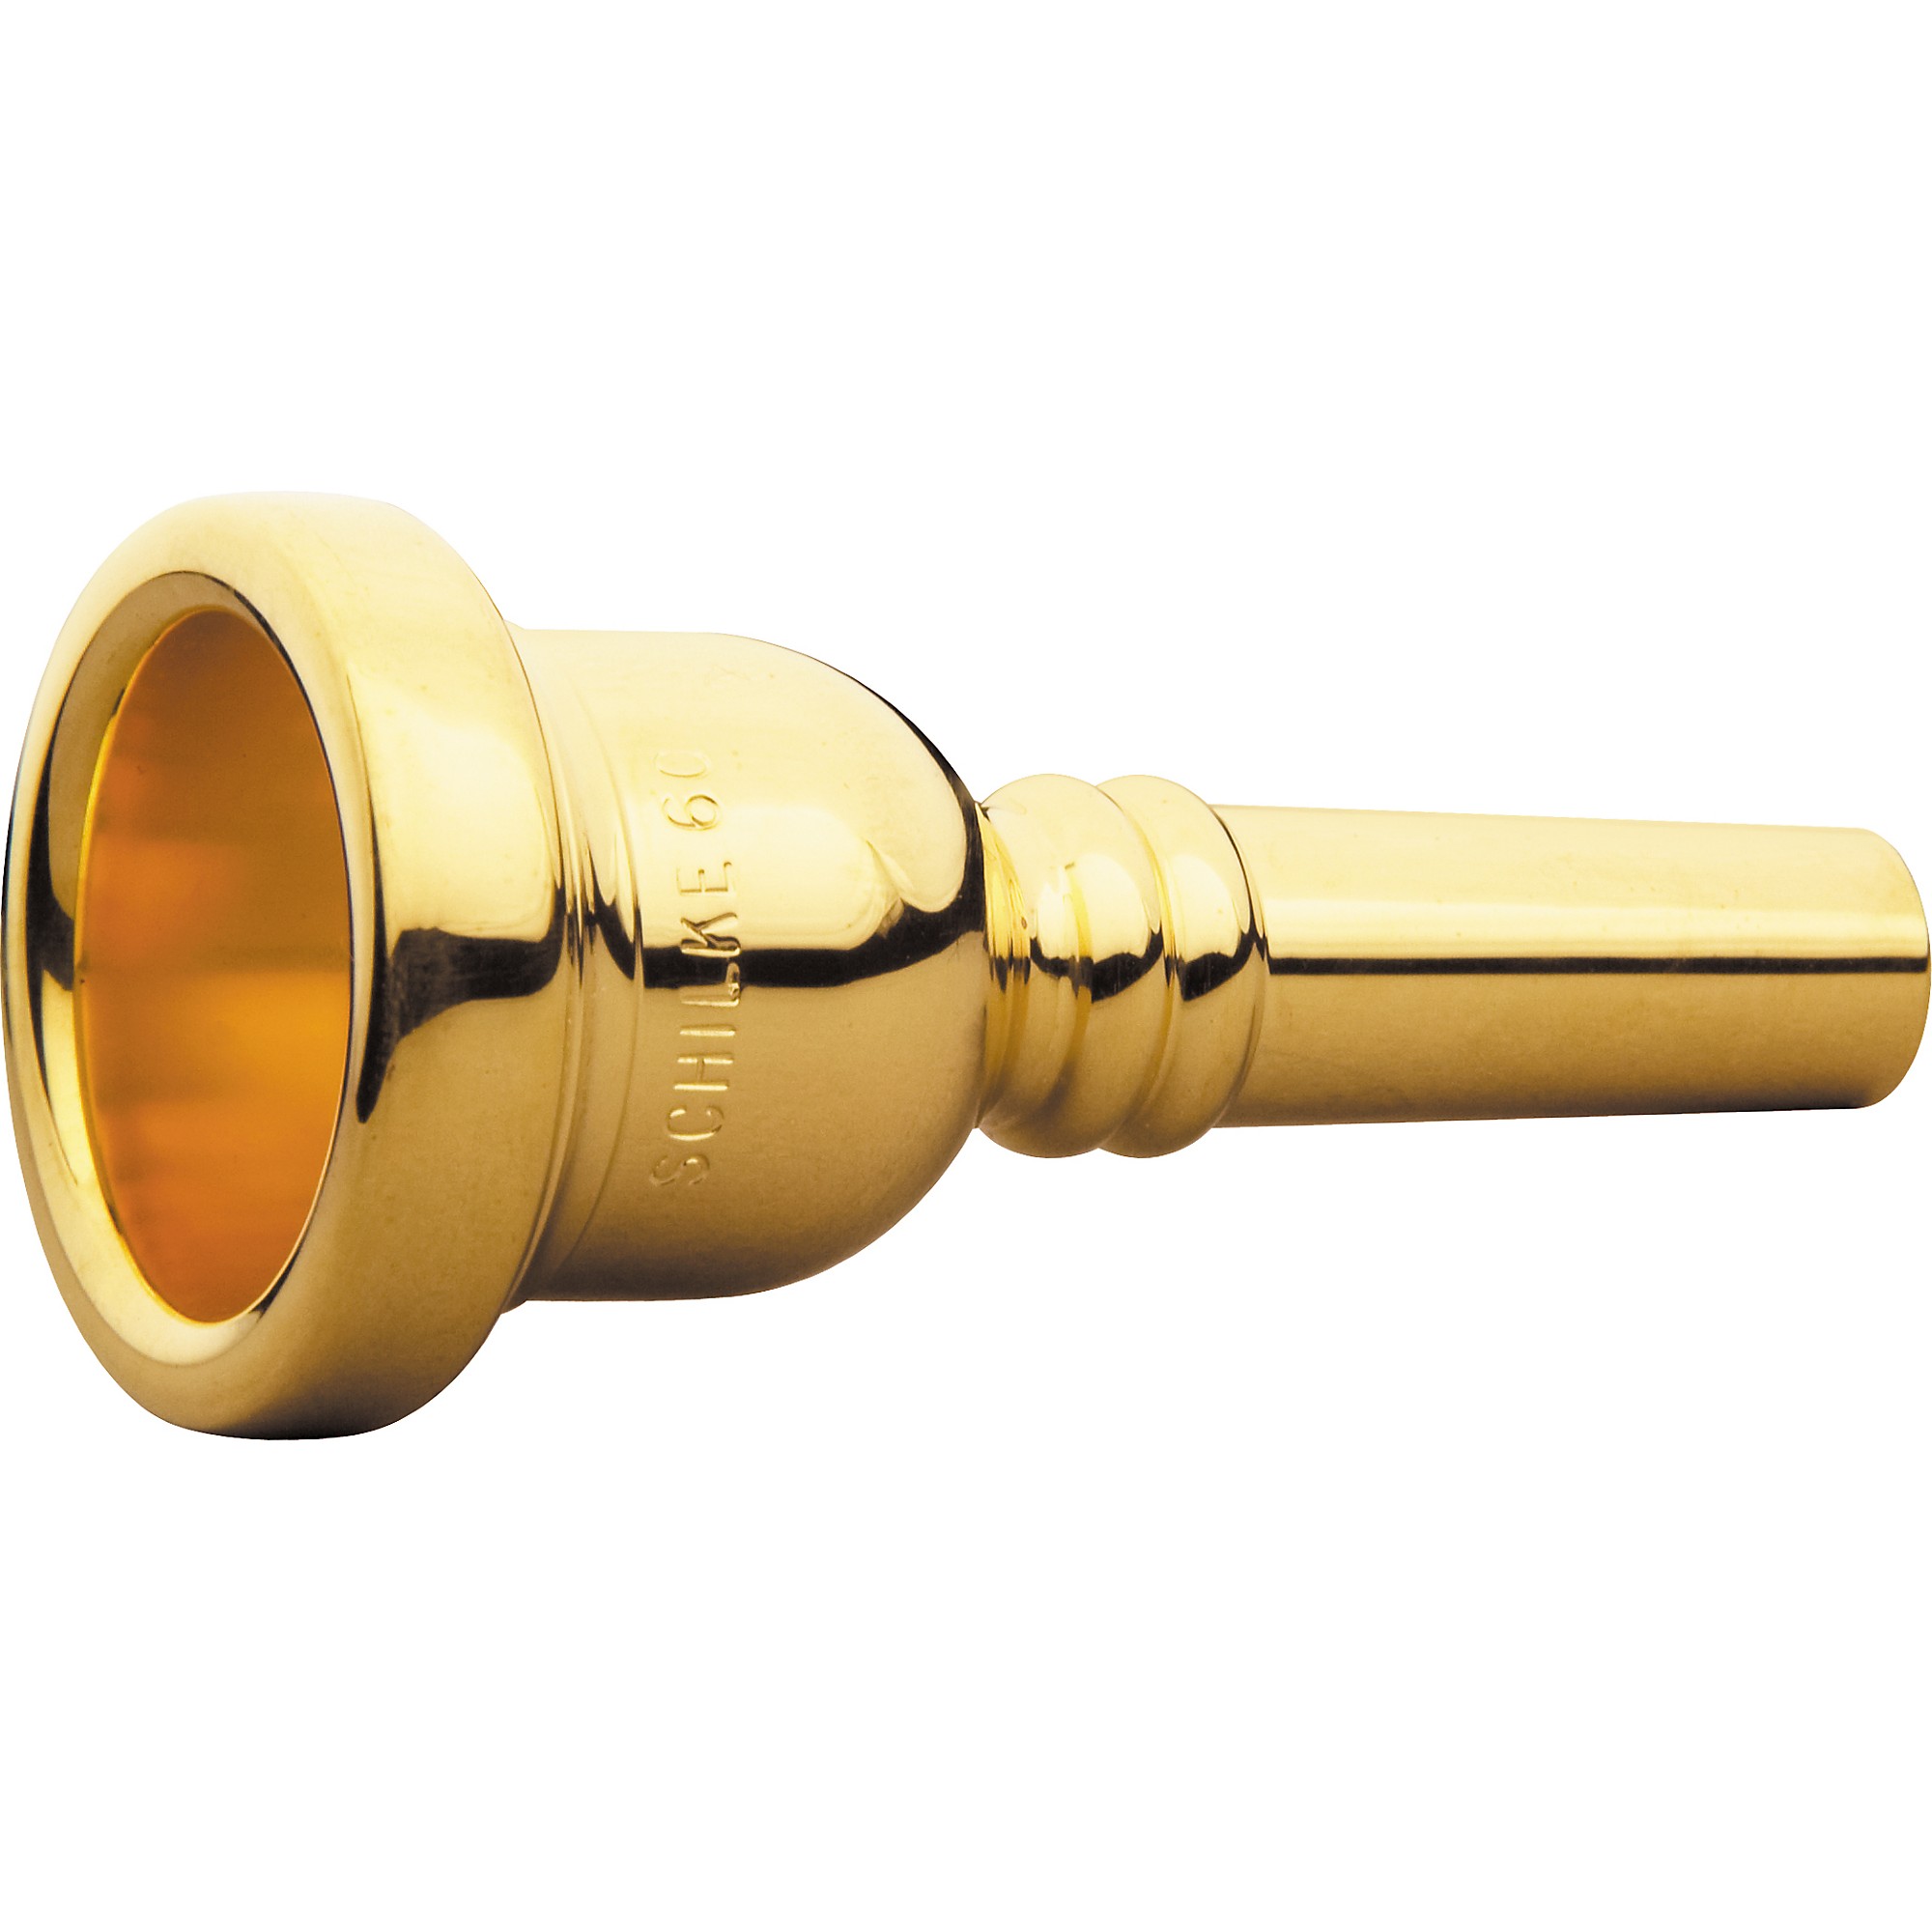 Trombone Mouthpieces - Standard / GP Series - Mouthpieces - Brass